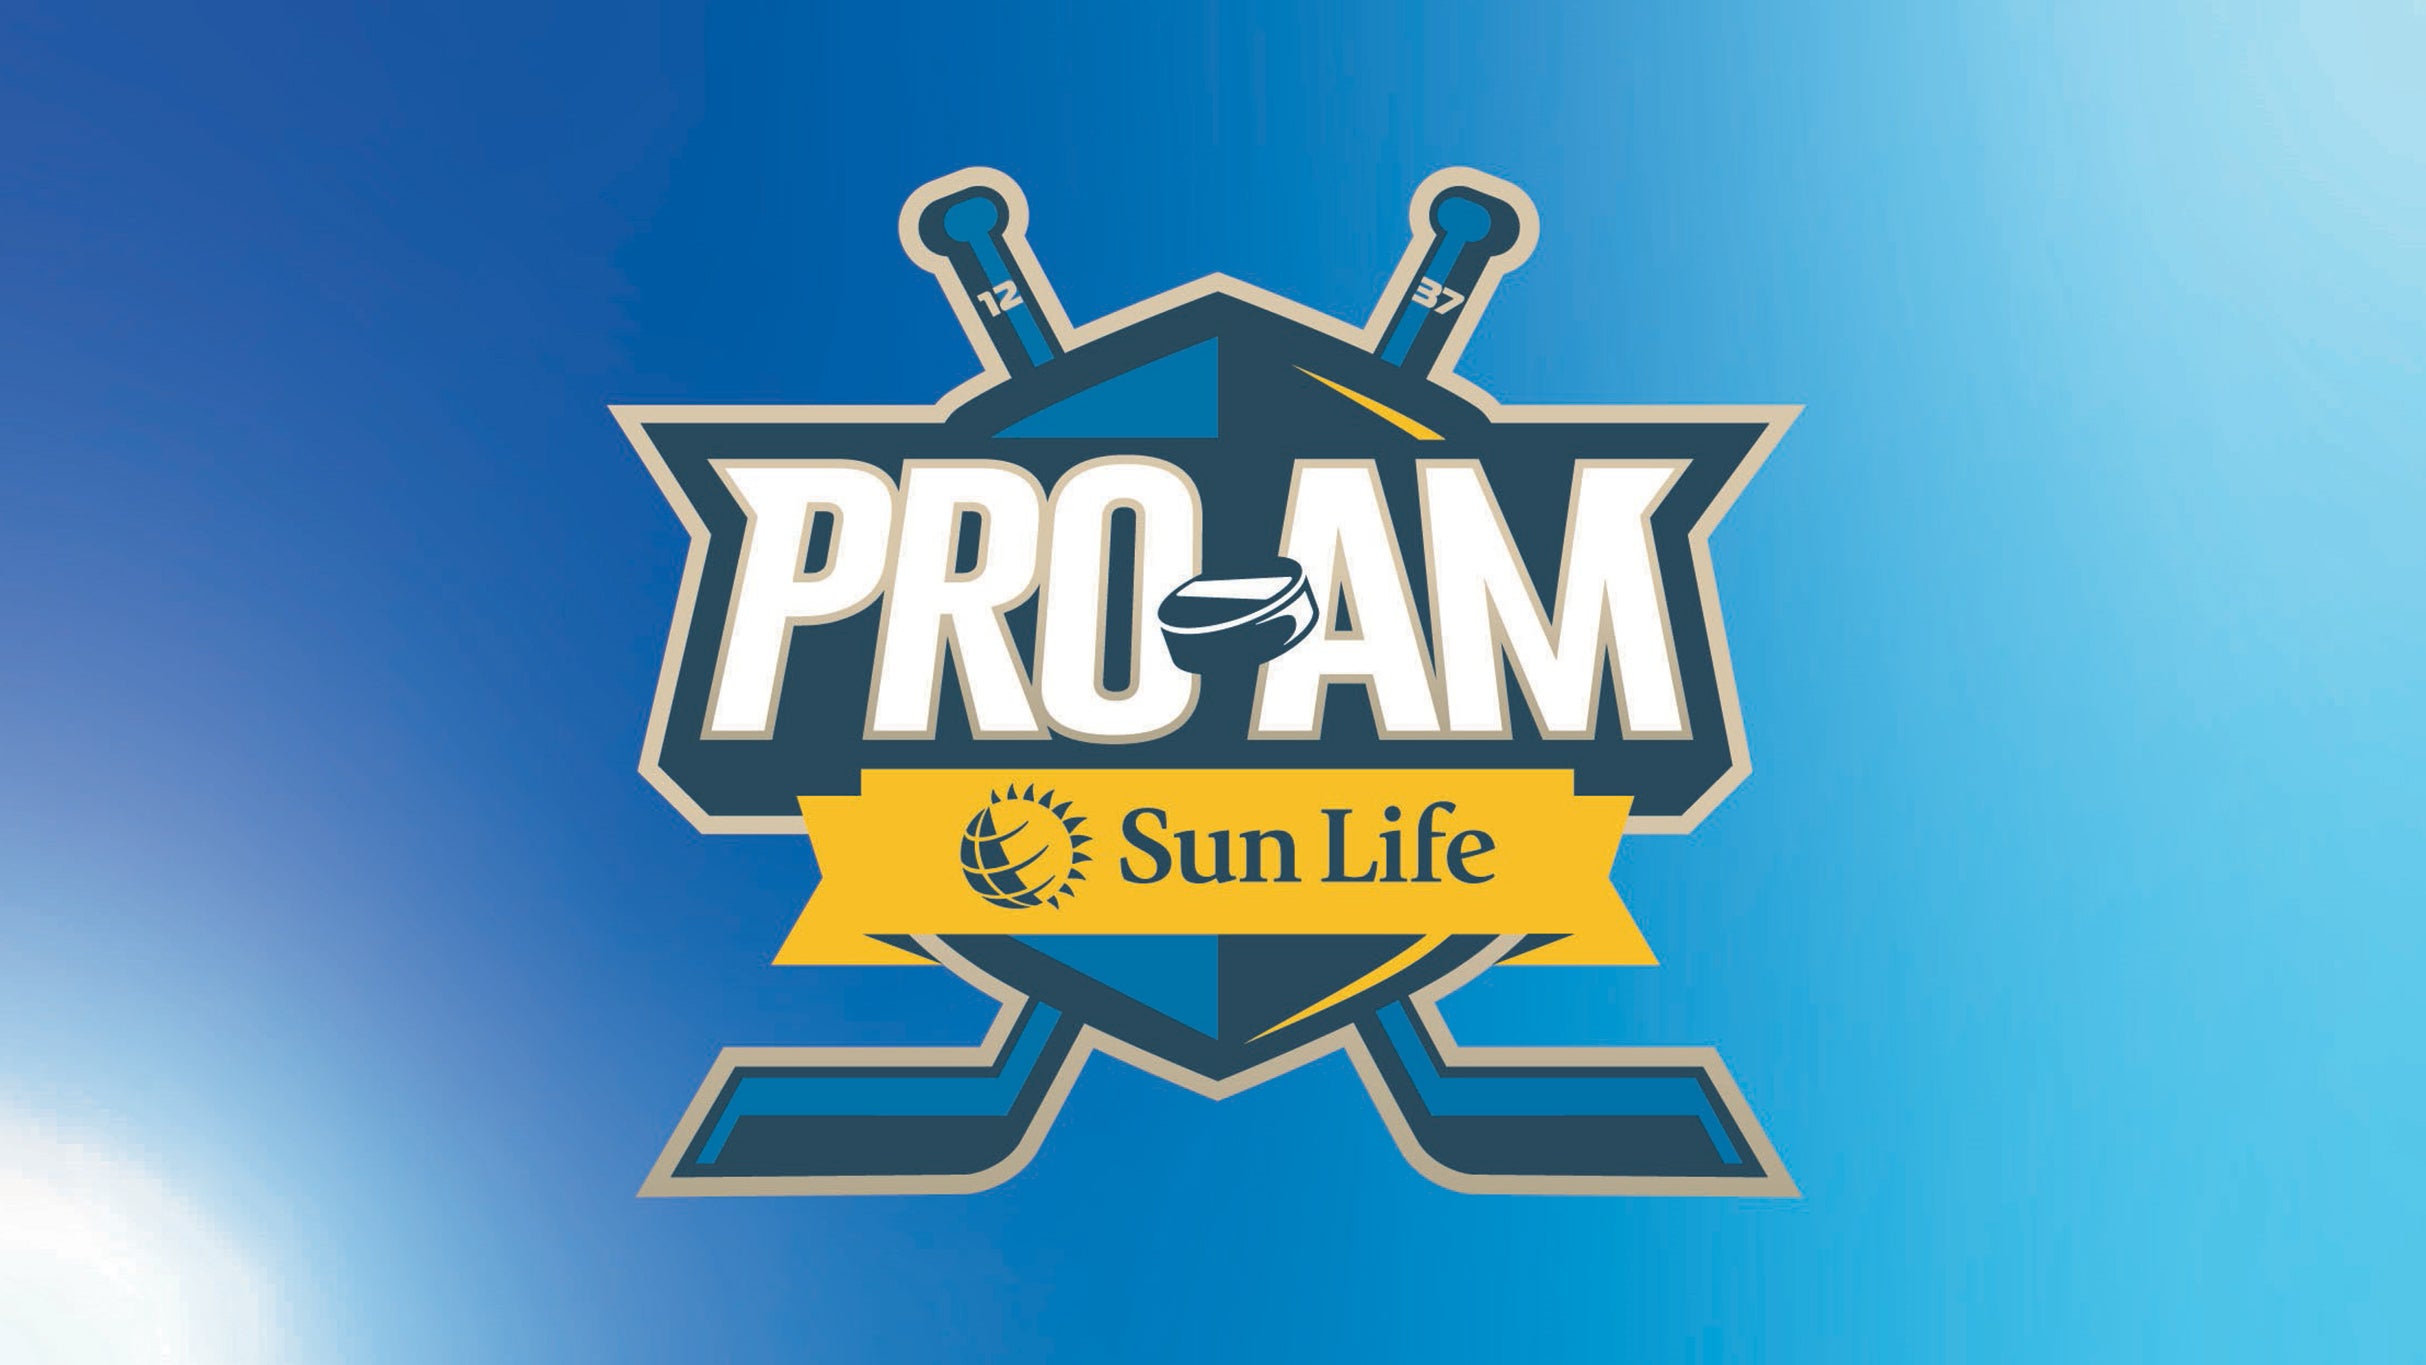 Pro-Am Sun Life presales in Québec